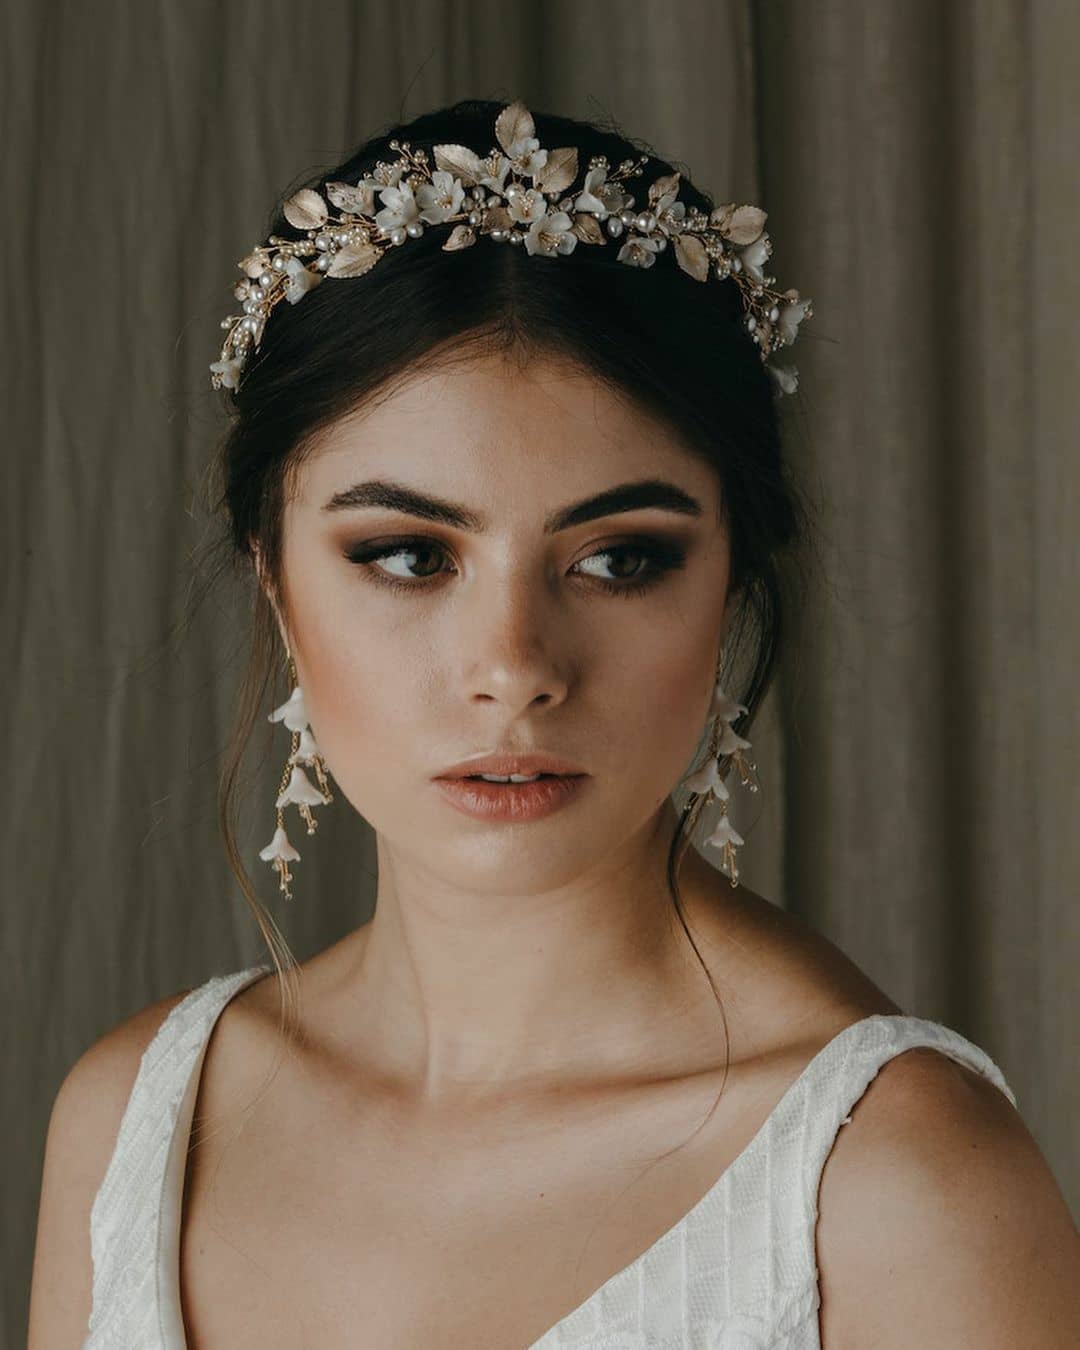 Western Wedding Bridal Crown Design Floral Designed Crown with Pearls